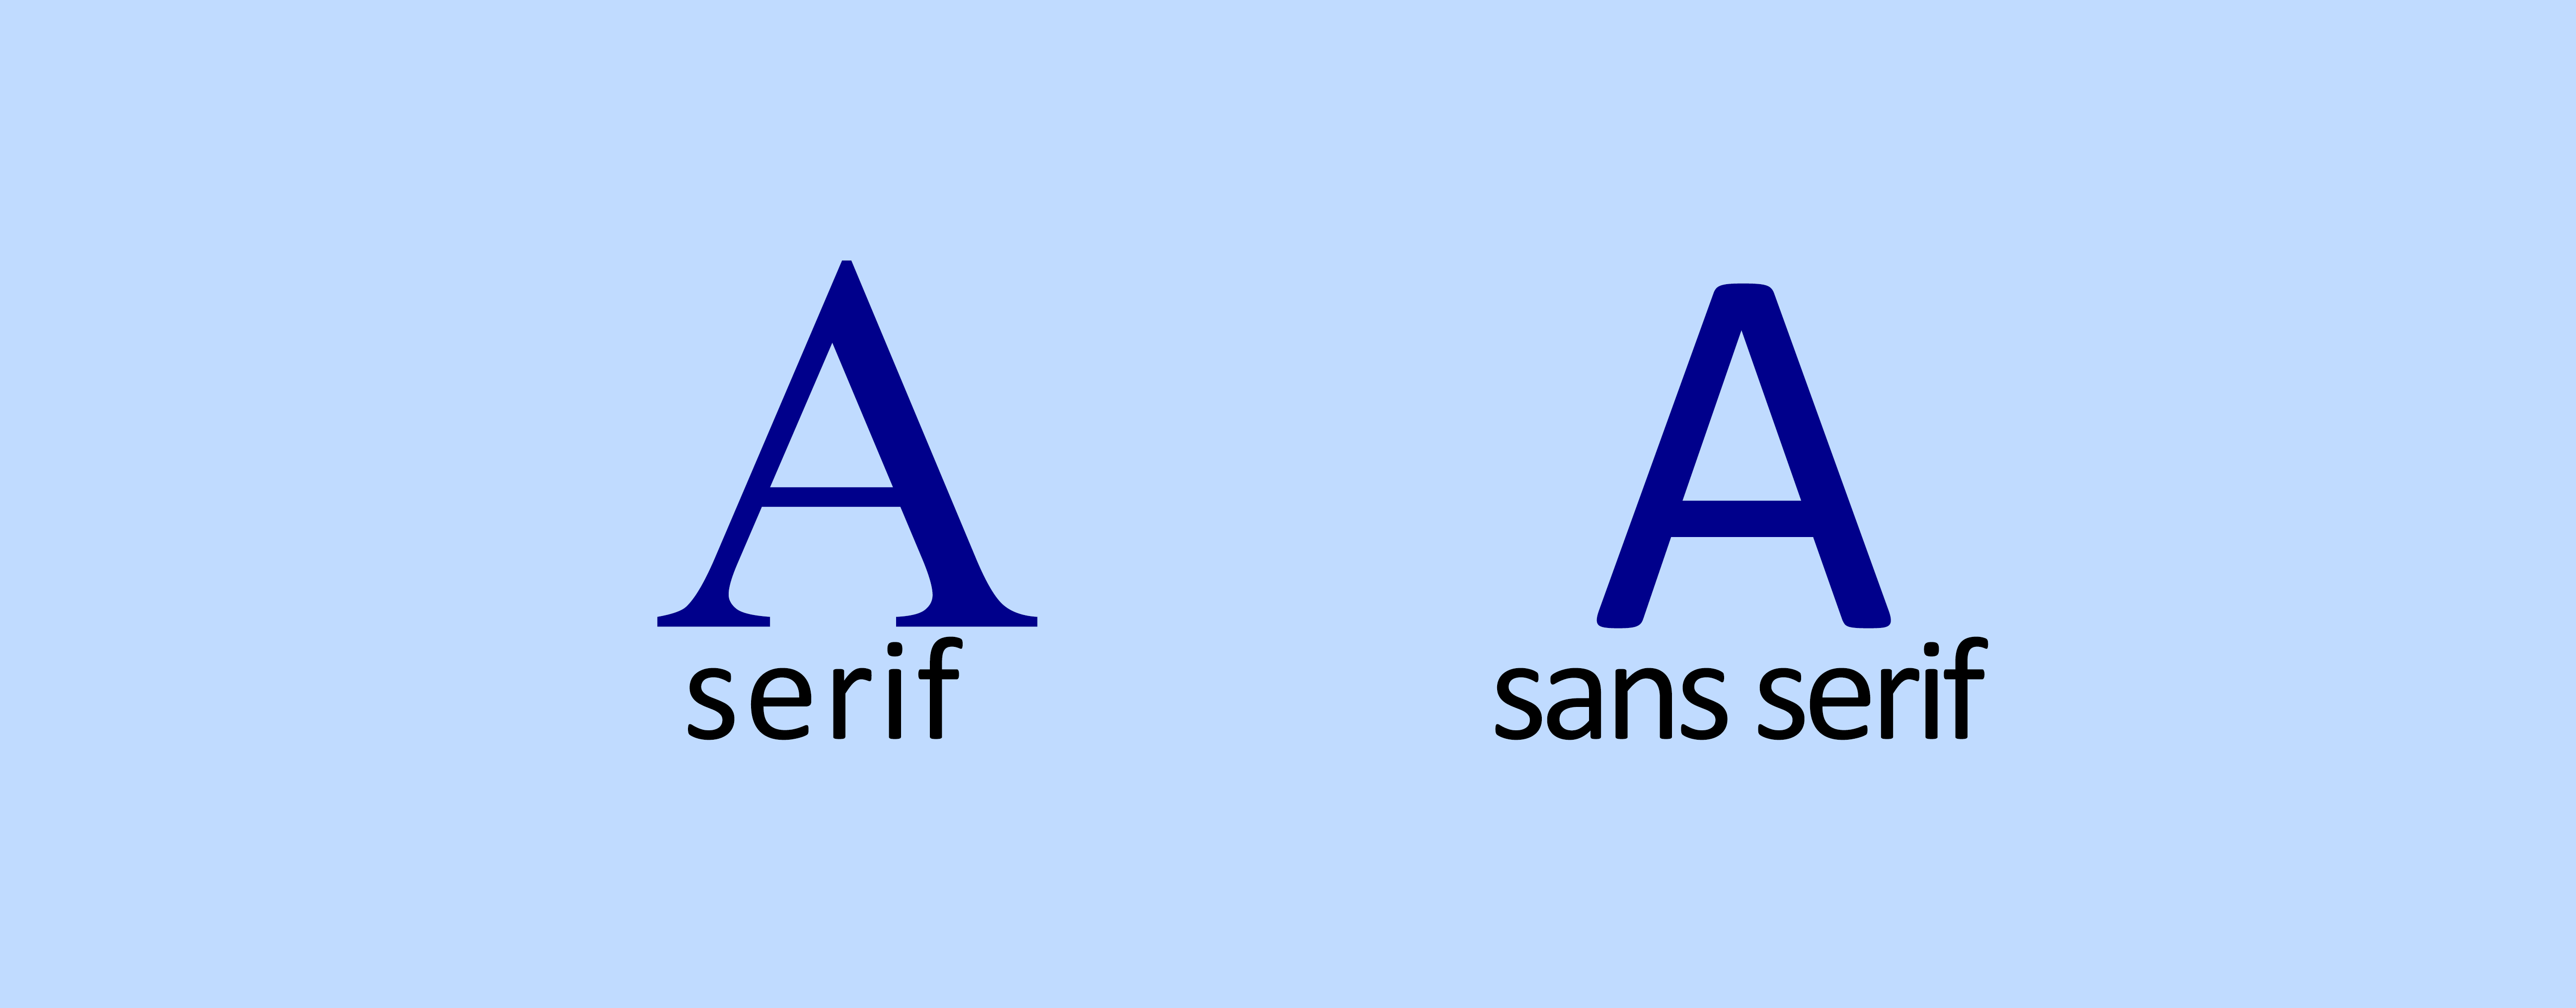 Differenza tra serif e sans serif